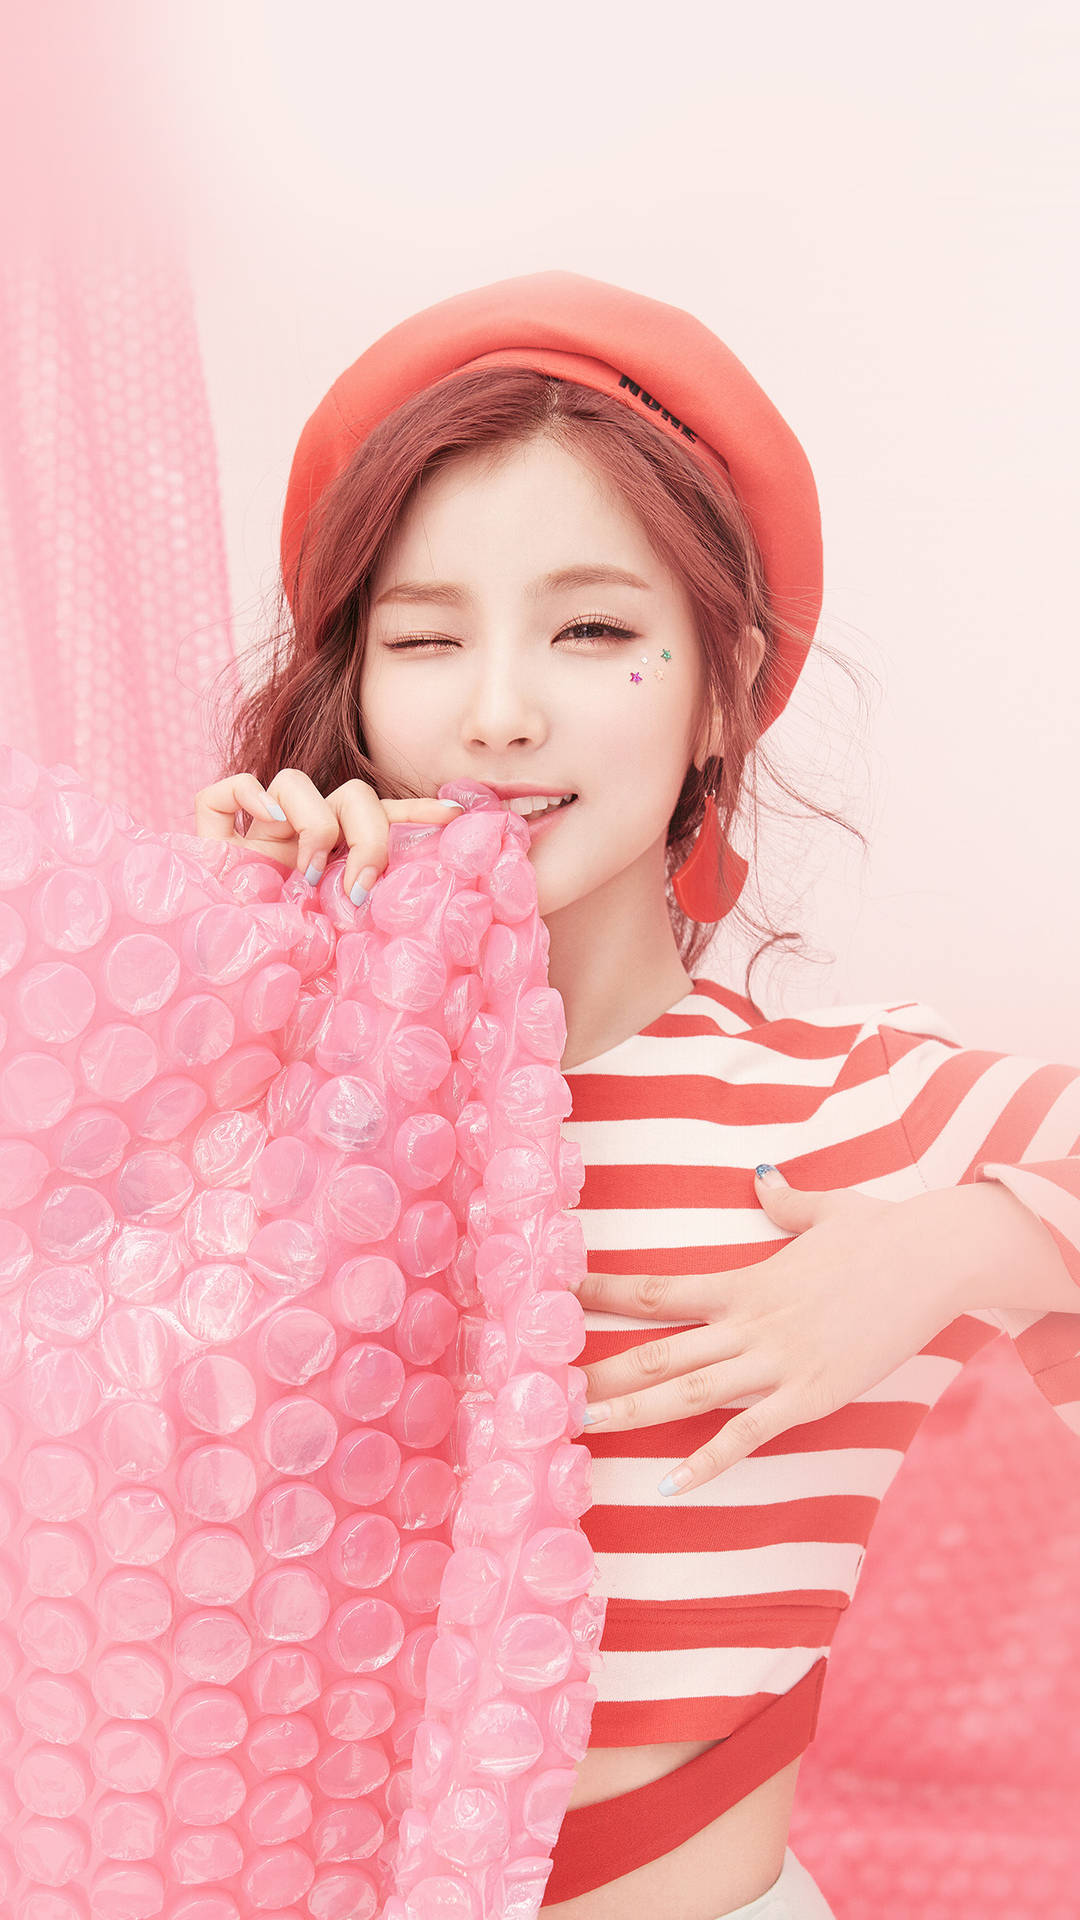 Free Cute Pink Girl Wallpaper Downloads, [100+] Cute Pink Girl Wallpapers  for FREE 